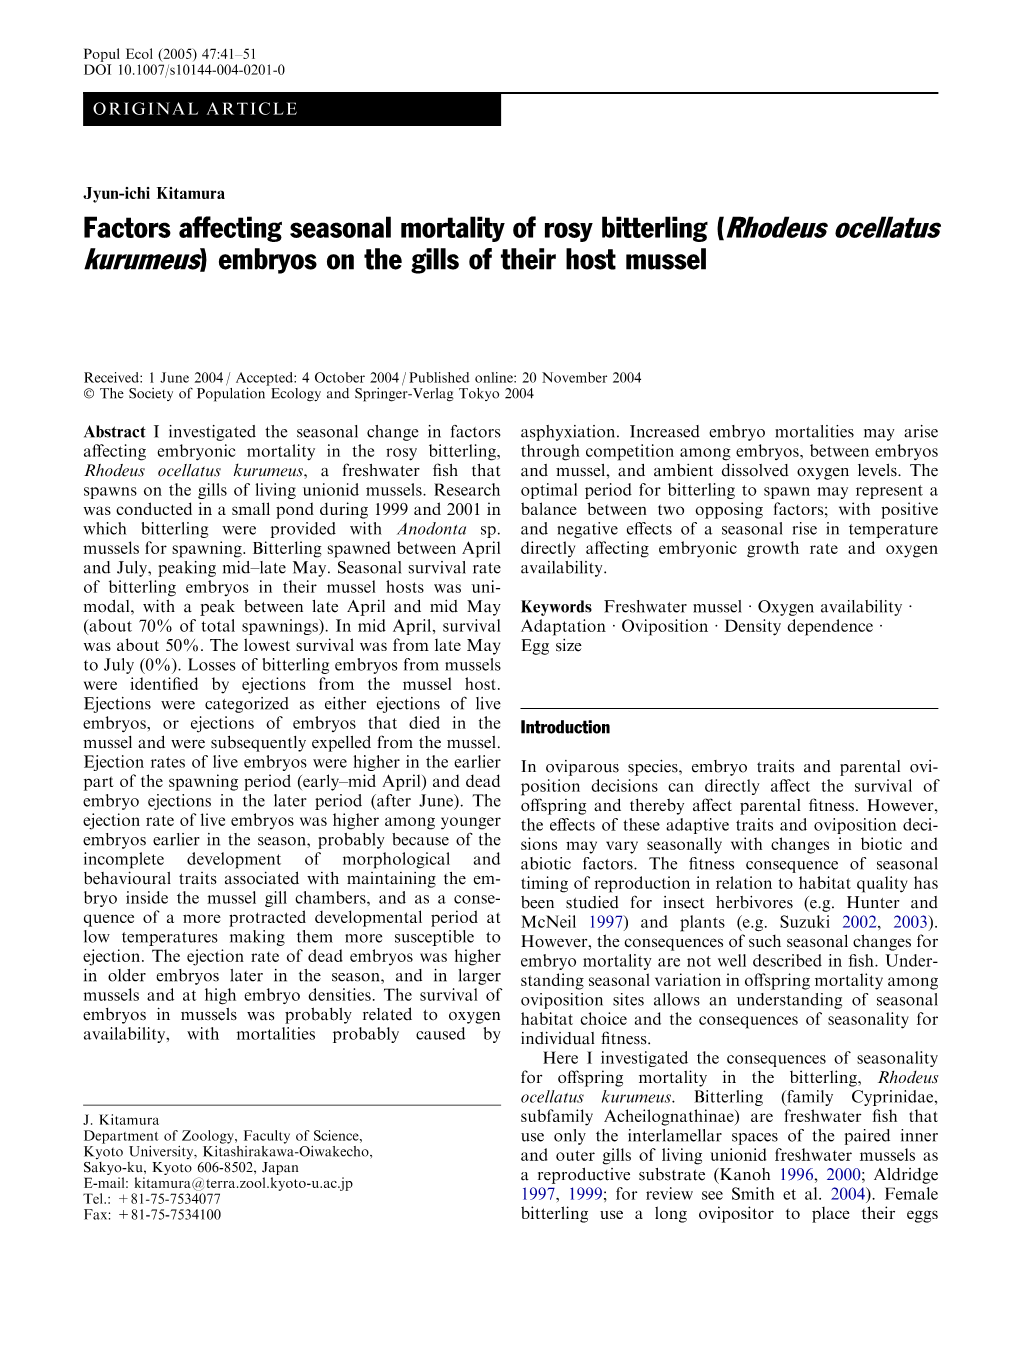 Factors Affecting Seasonal Mortality of Rosy Bitterling (Rhodeus Ocellatus Kurumeus) Embryos on the Gills of Their Host Mussel